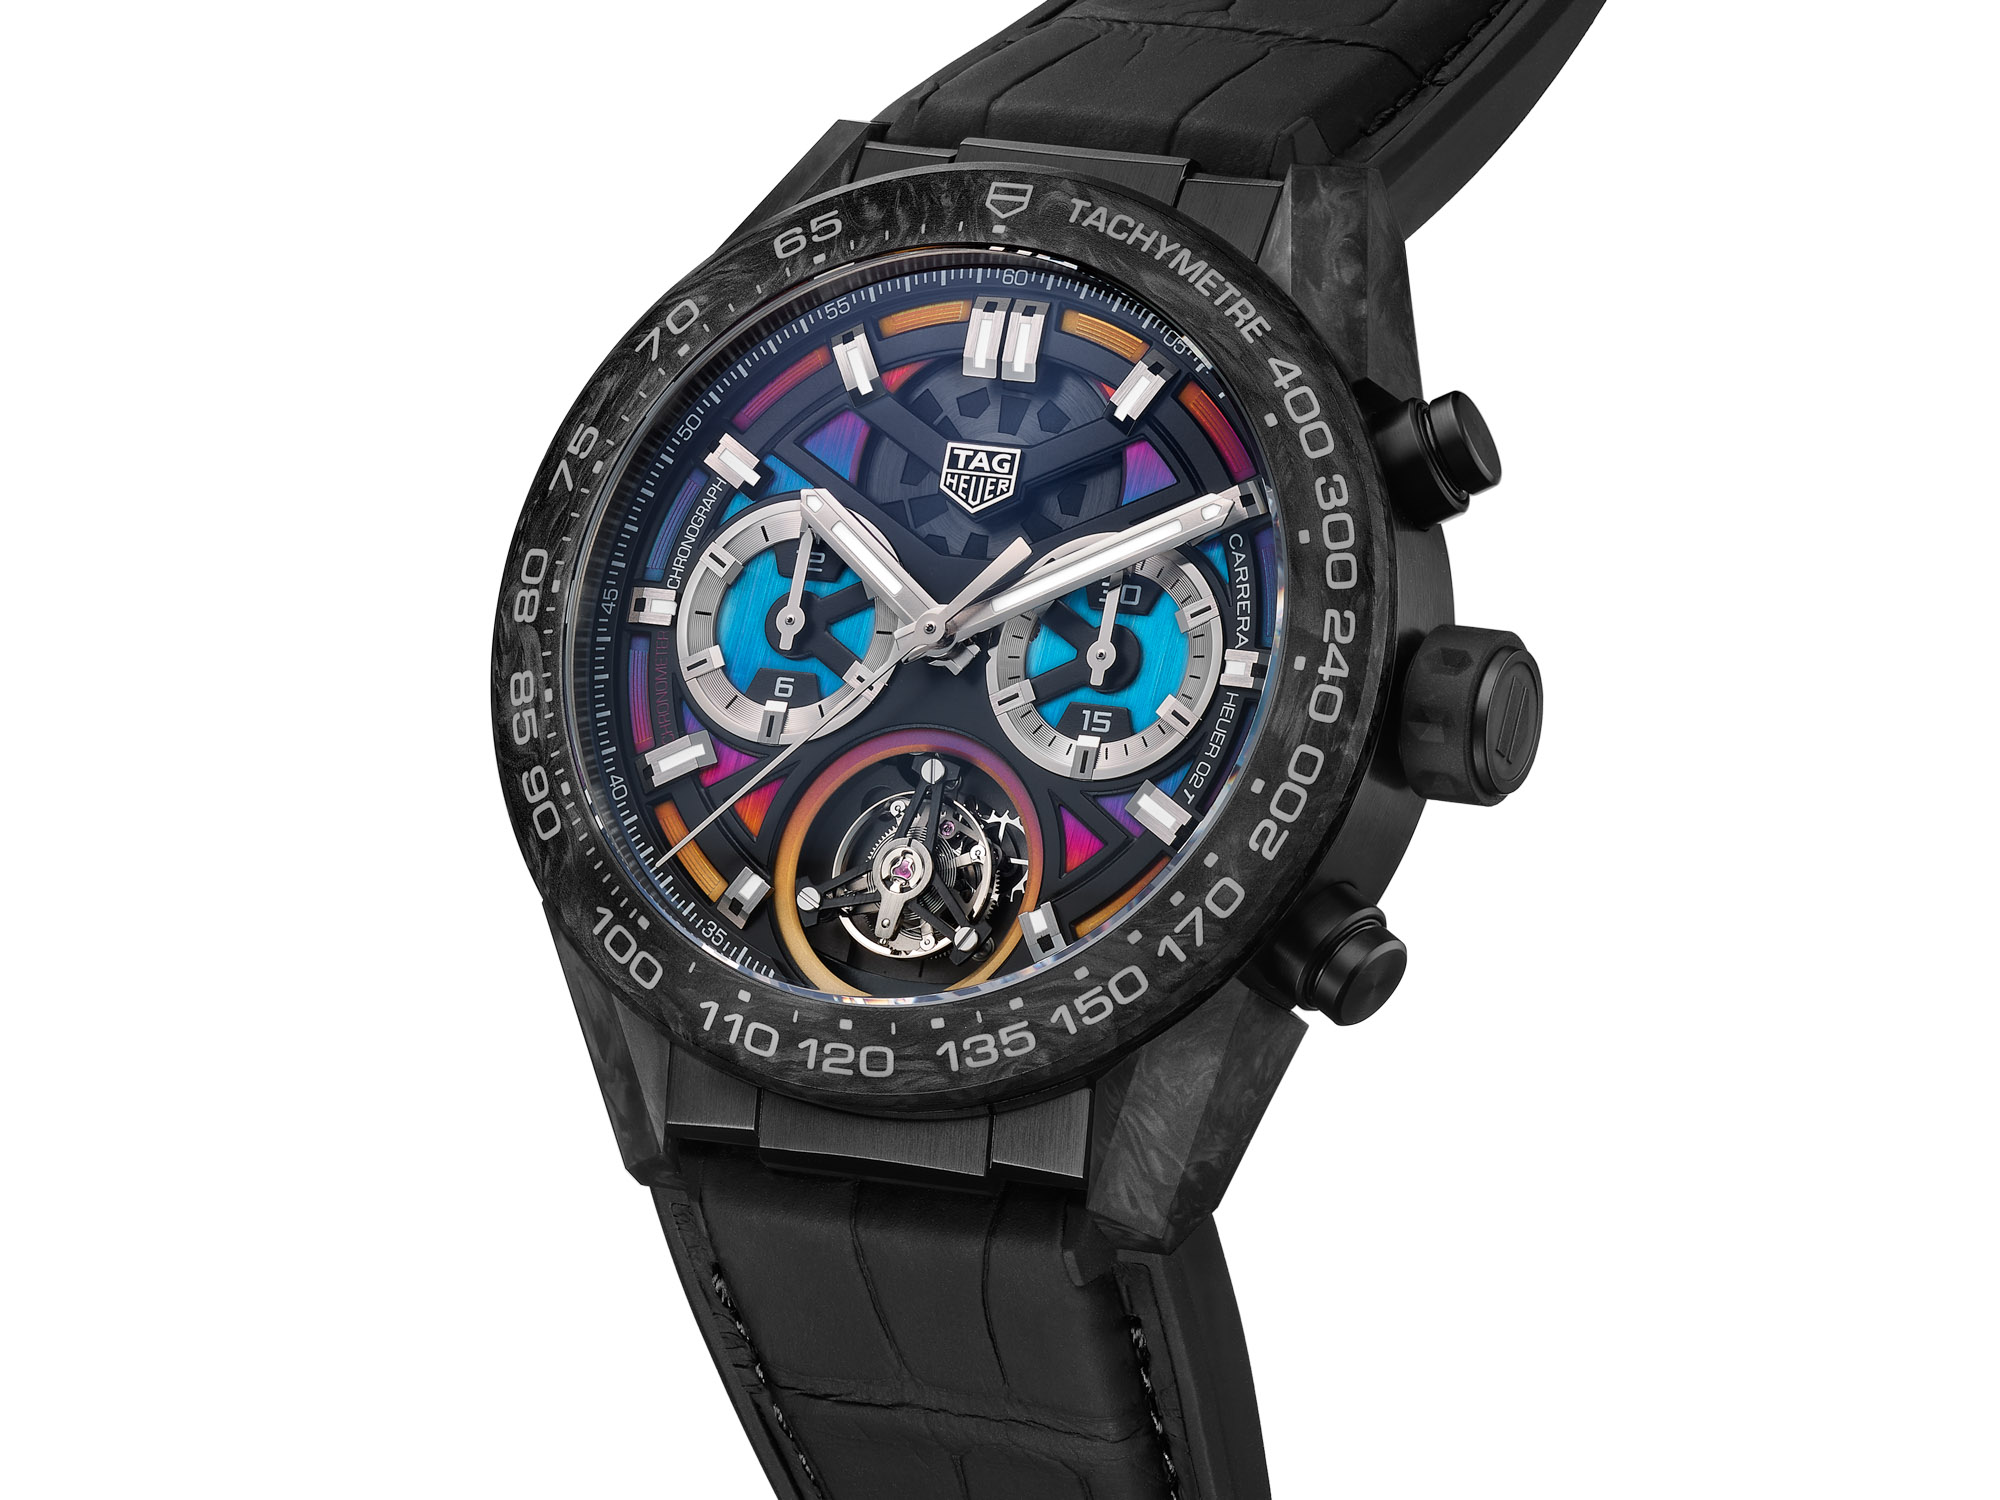 The Luxury TAG Heuer Carrera Chronograph Tourbillon Polychrome Watch